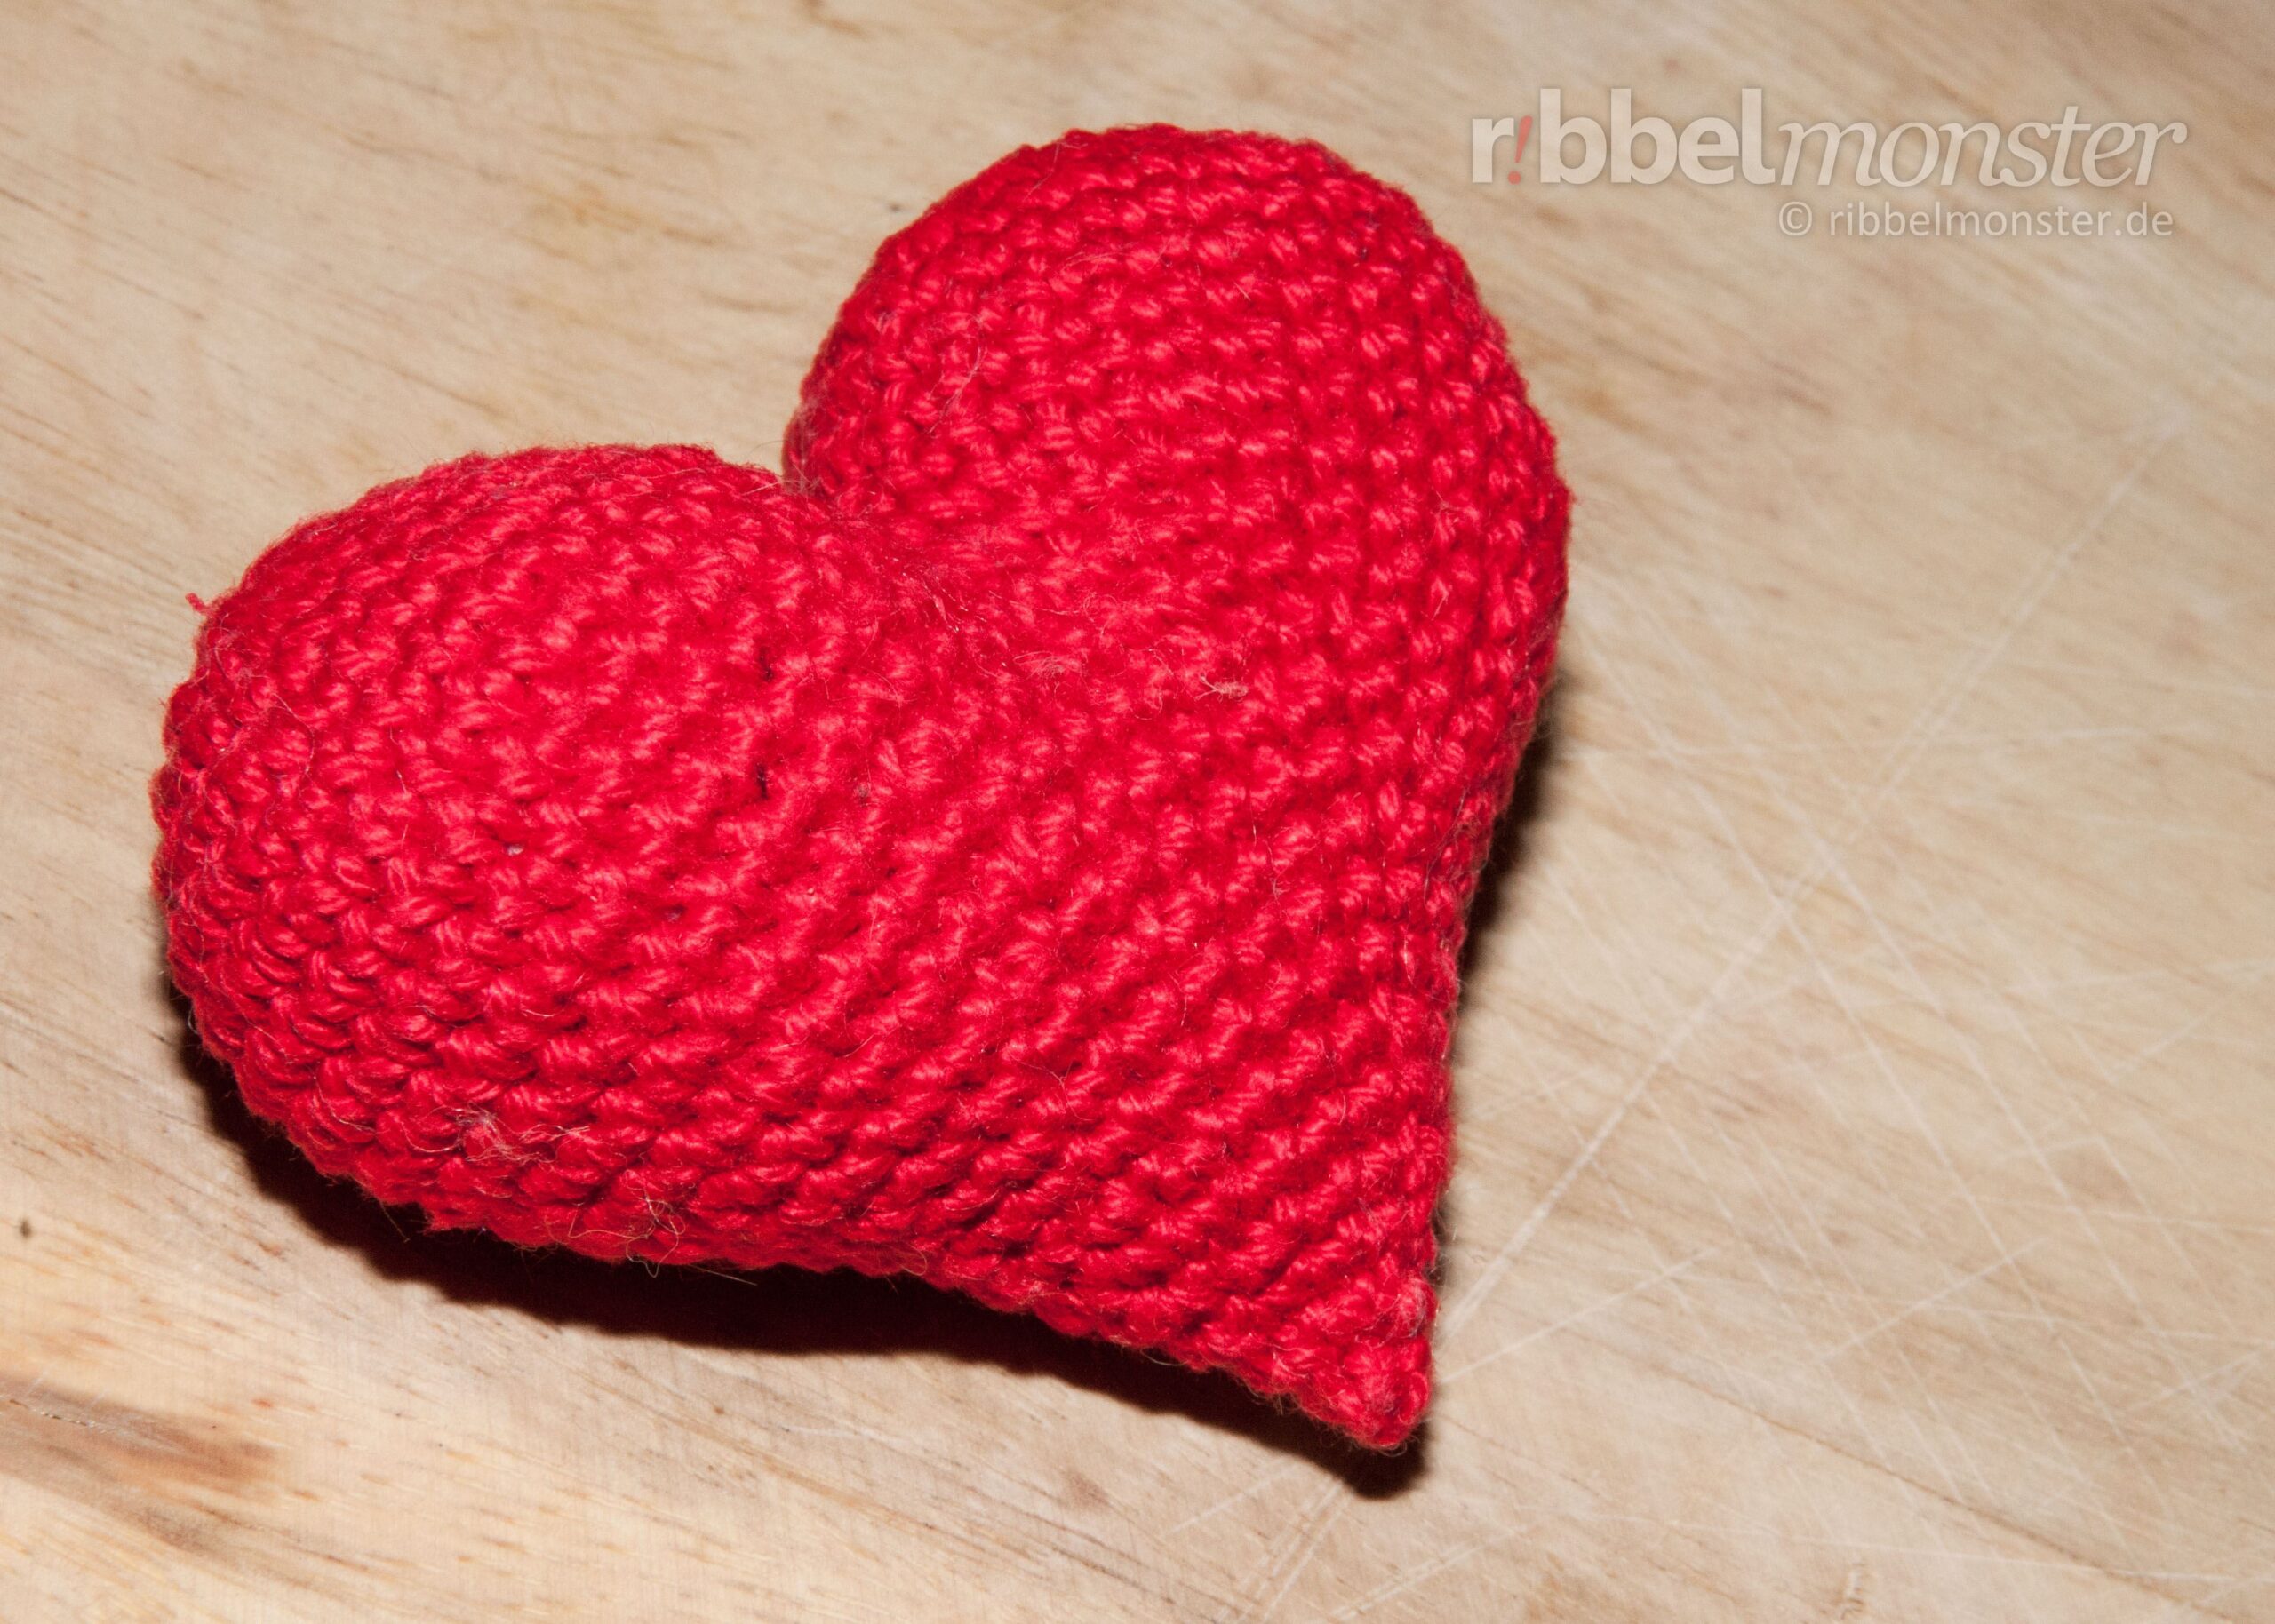 Amigurumi – Crochet “heartfelt” Heart